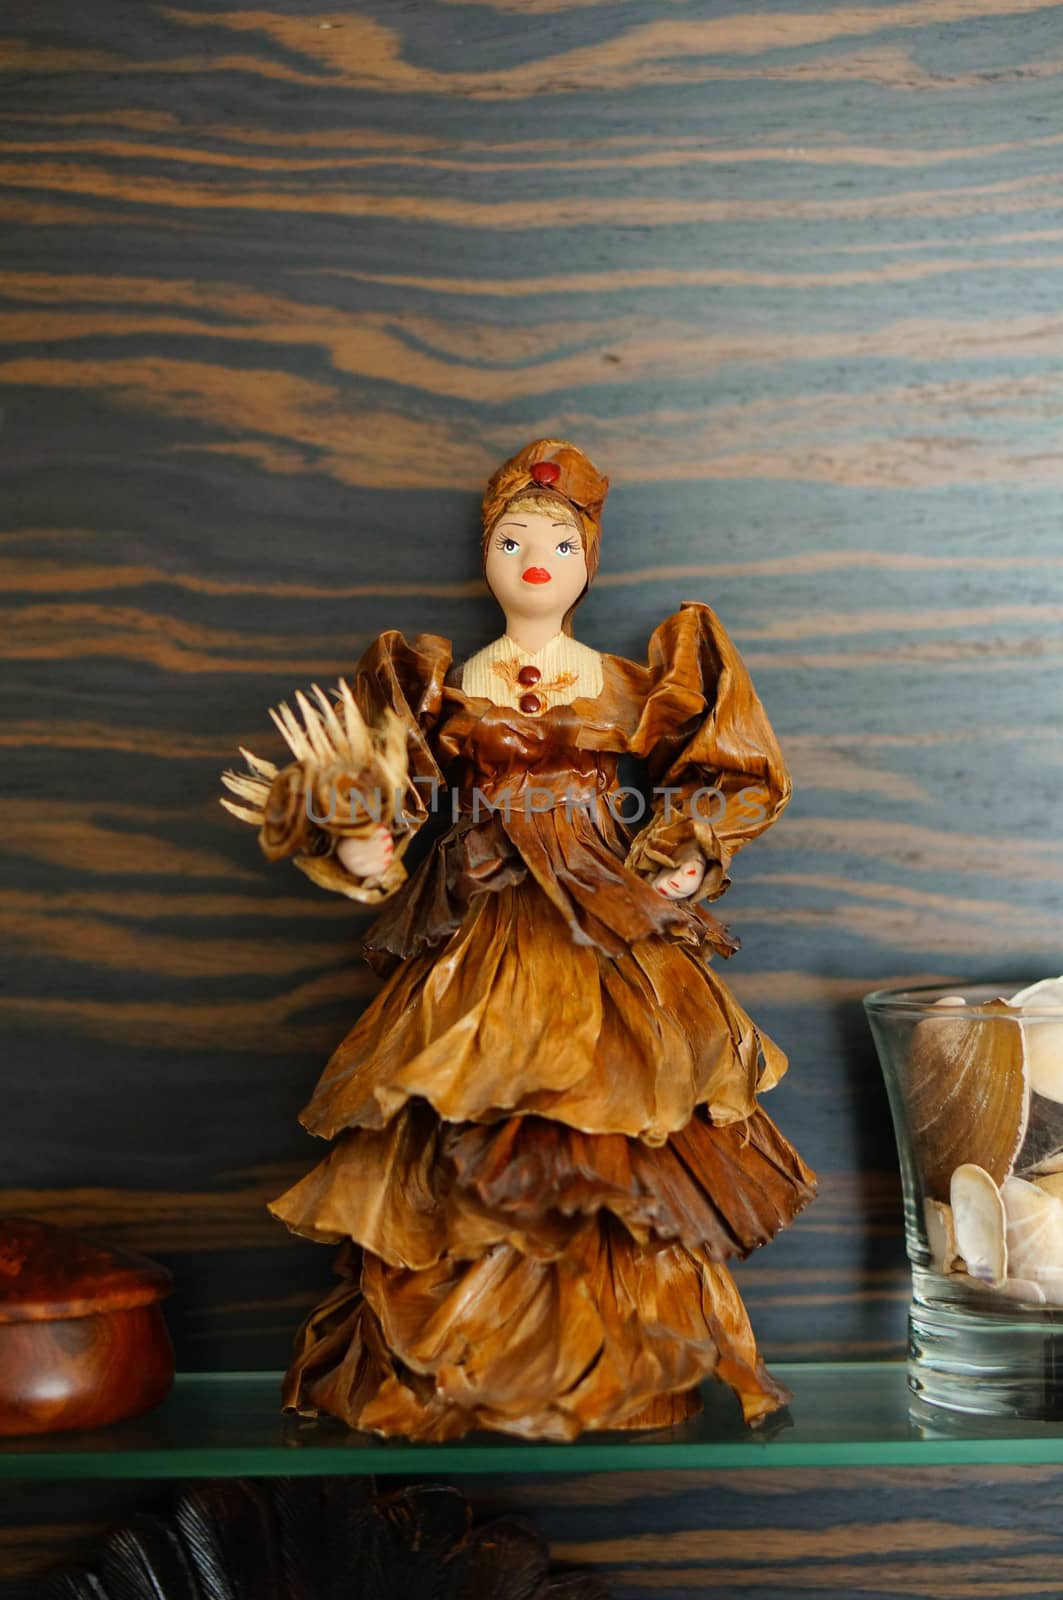 Spanish woman figure on glass shelf